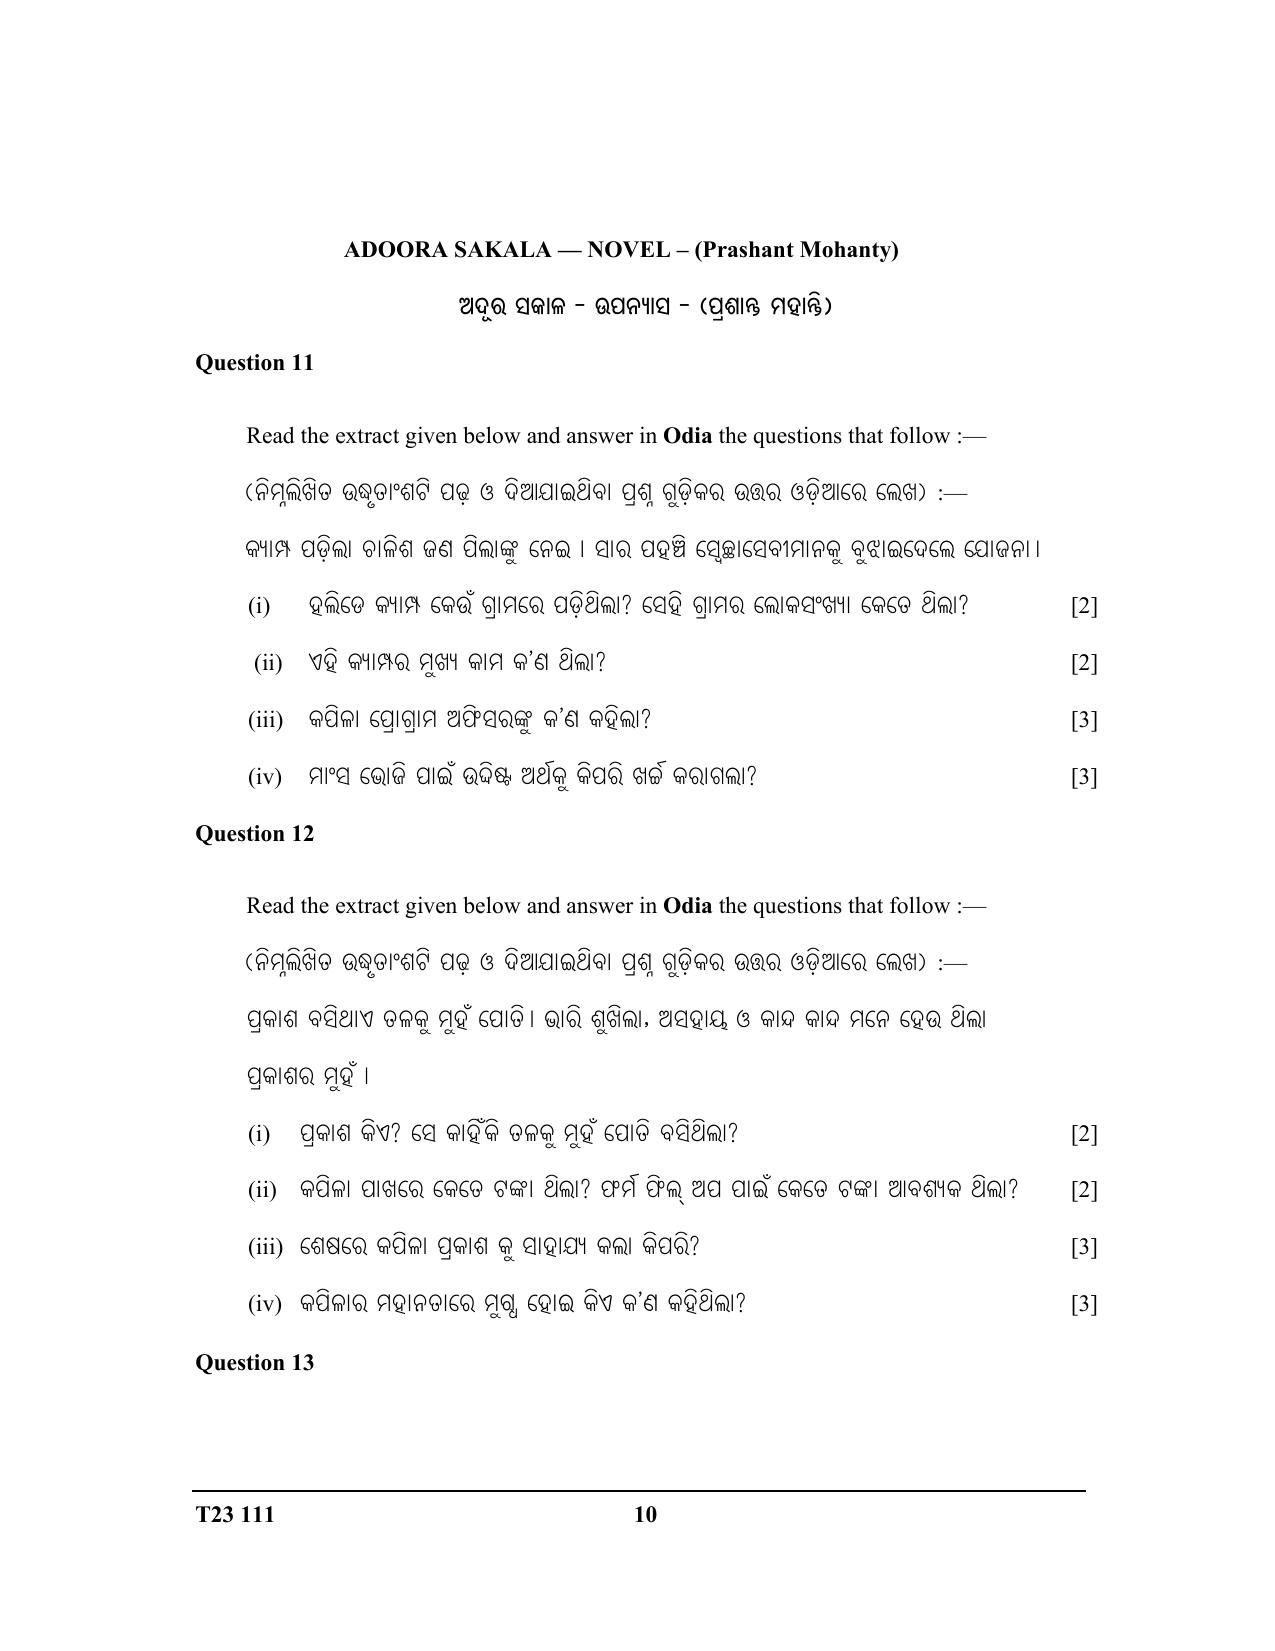 ICSE Class 10 ODIA 2023 Question Paper - Page 10